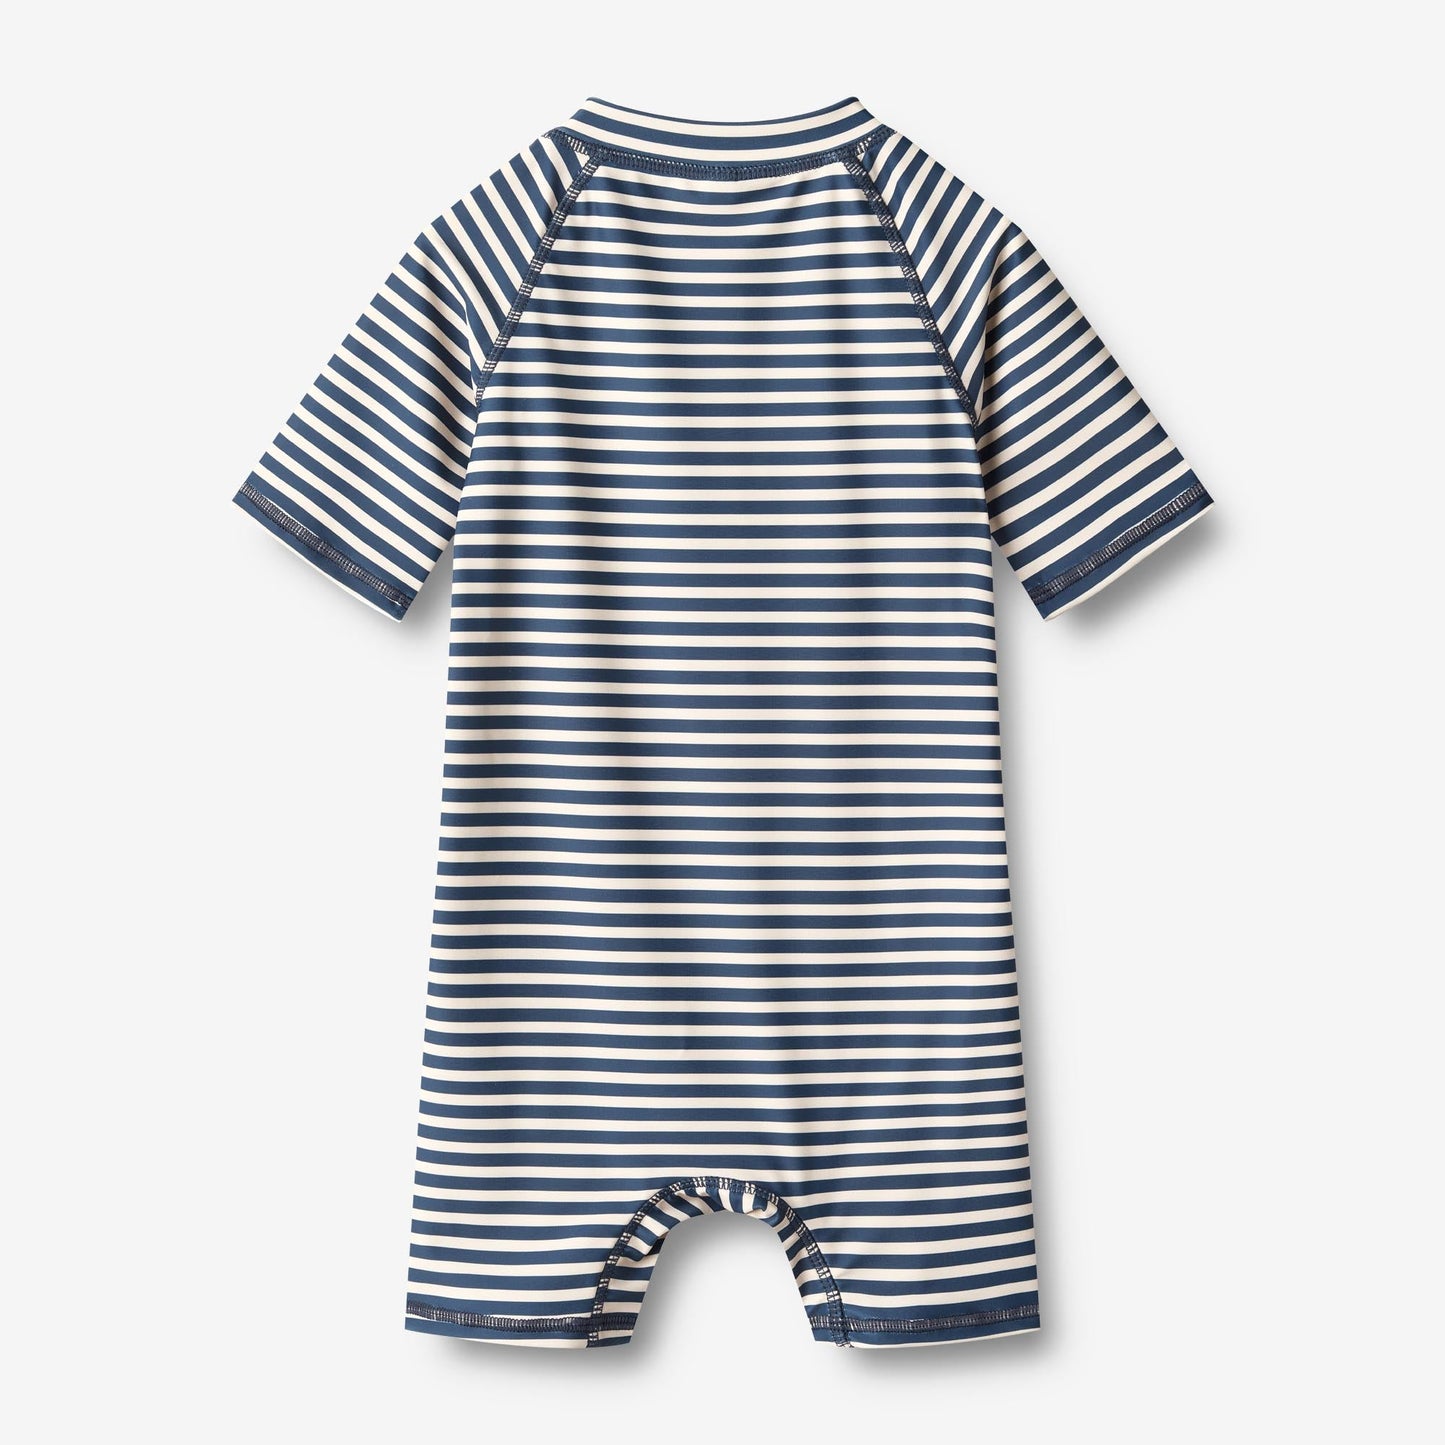 Wheat 'Cas' S/S Children's Swimsuit - Indigo Stripe